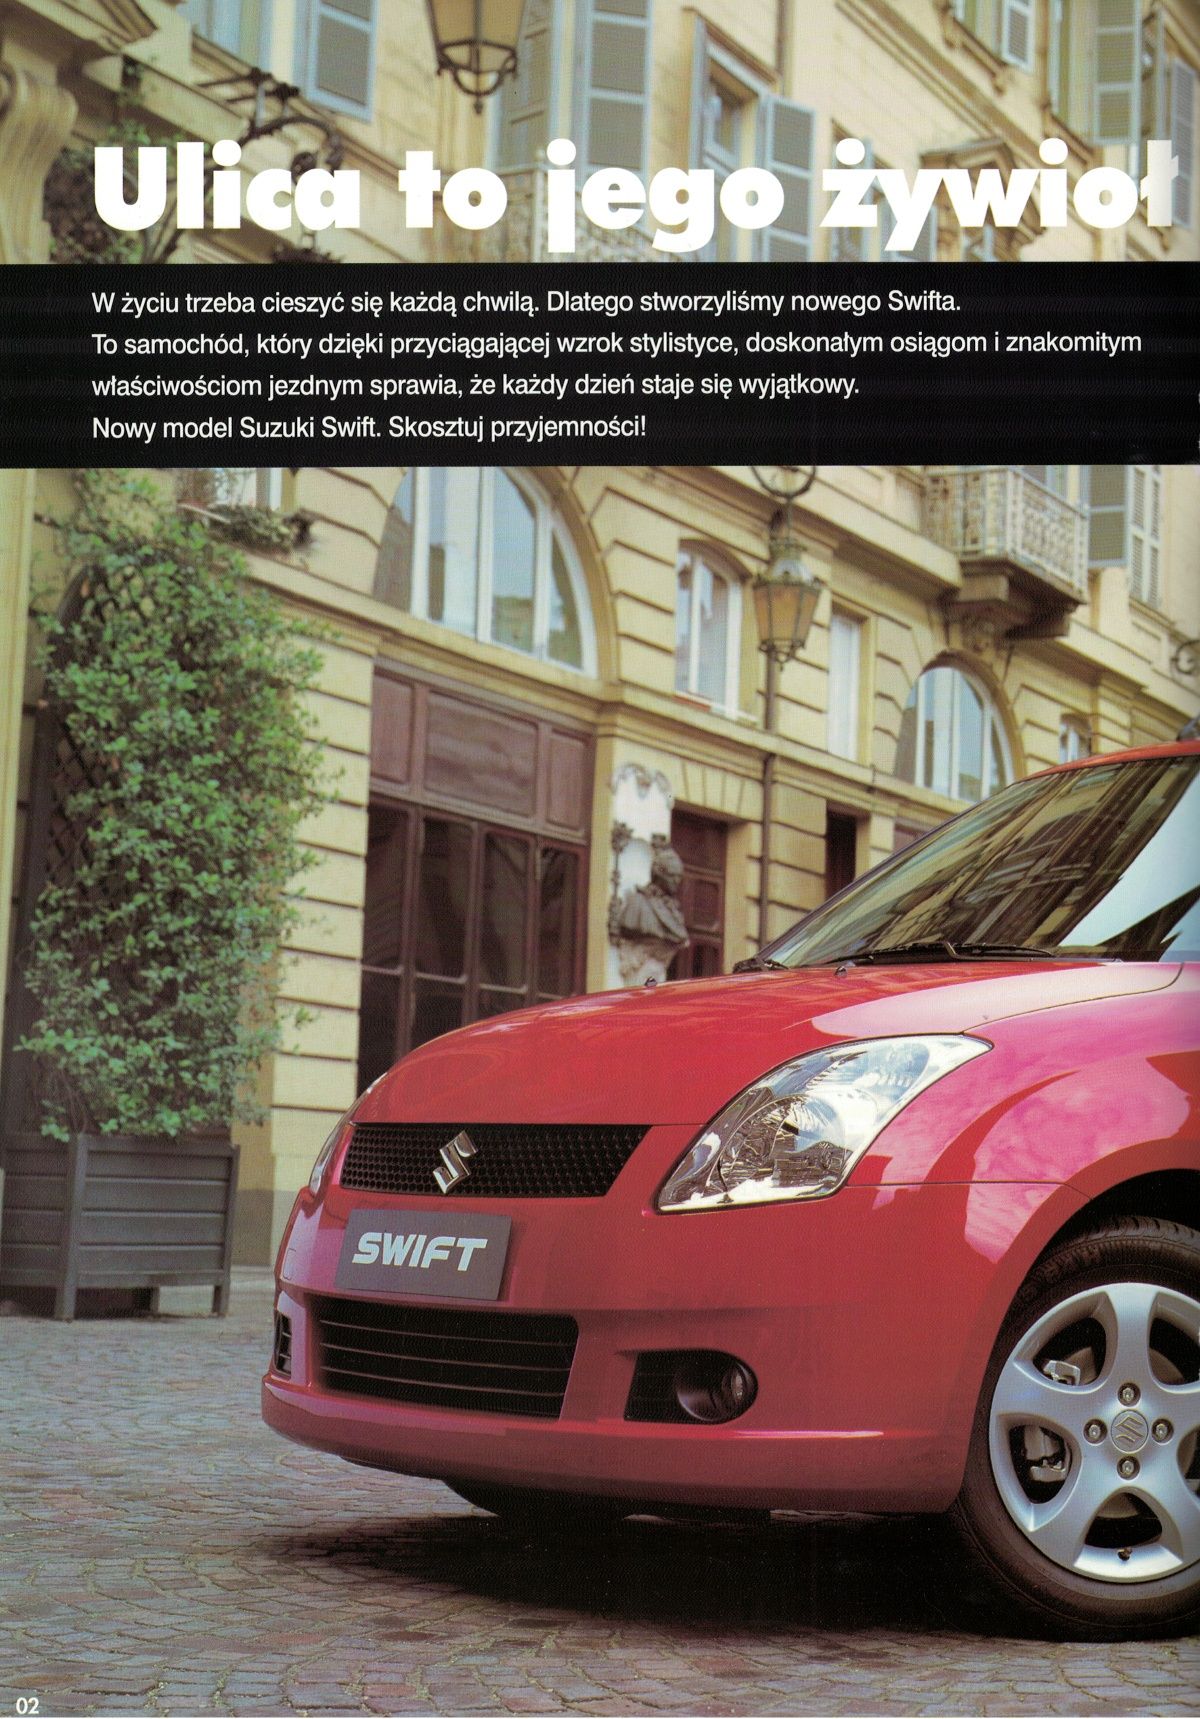 Suzuki swift prospekt/ katalog